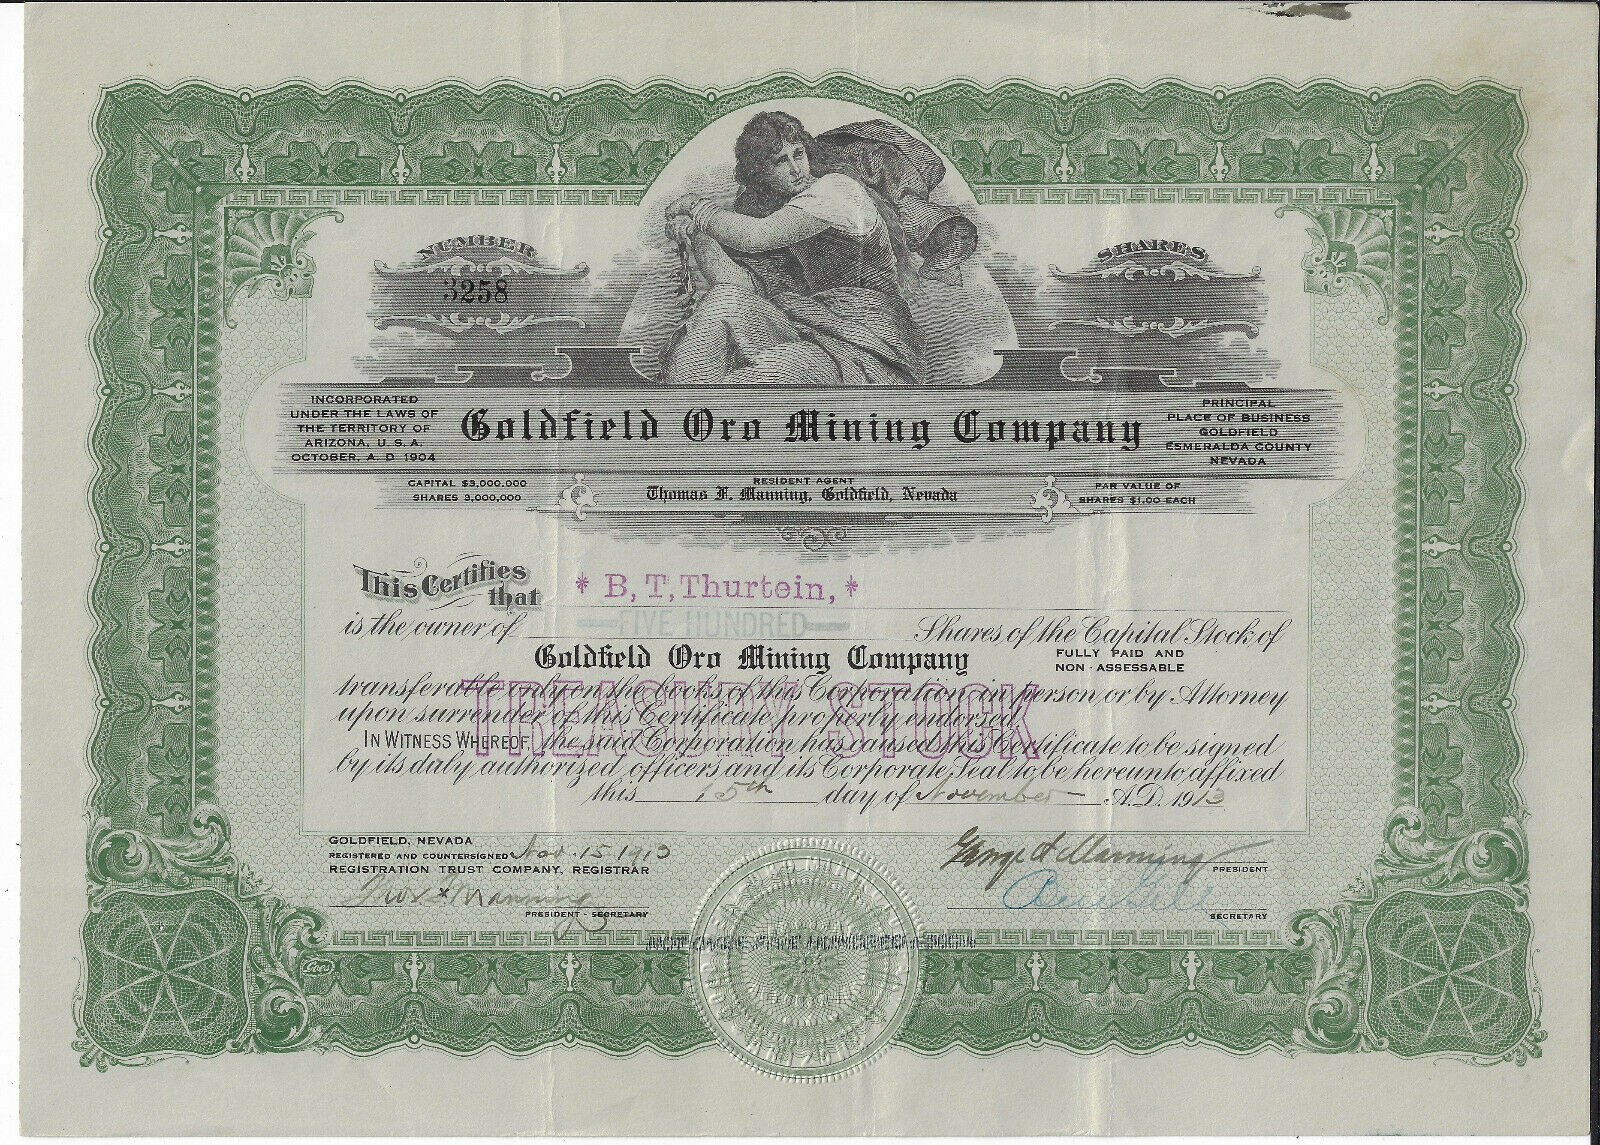 Nevada 1913 Goldfield Oro Mining Company Stock Certificate Goldfield